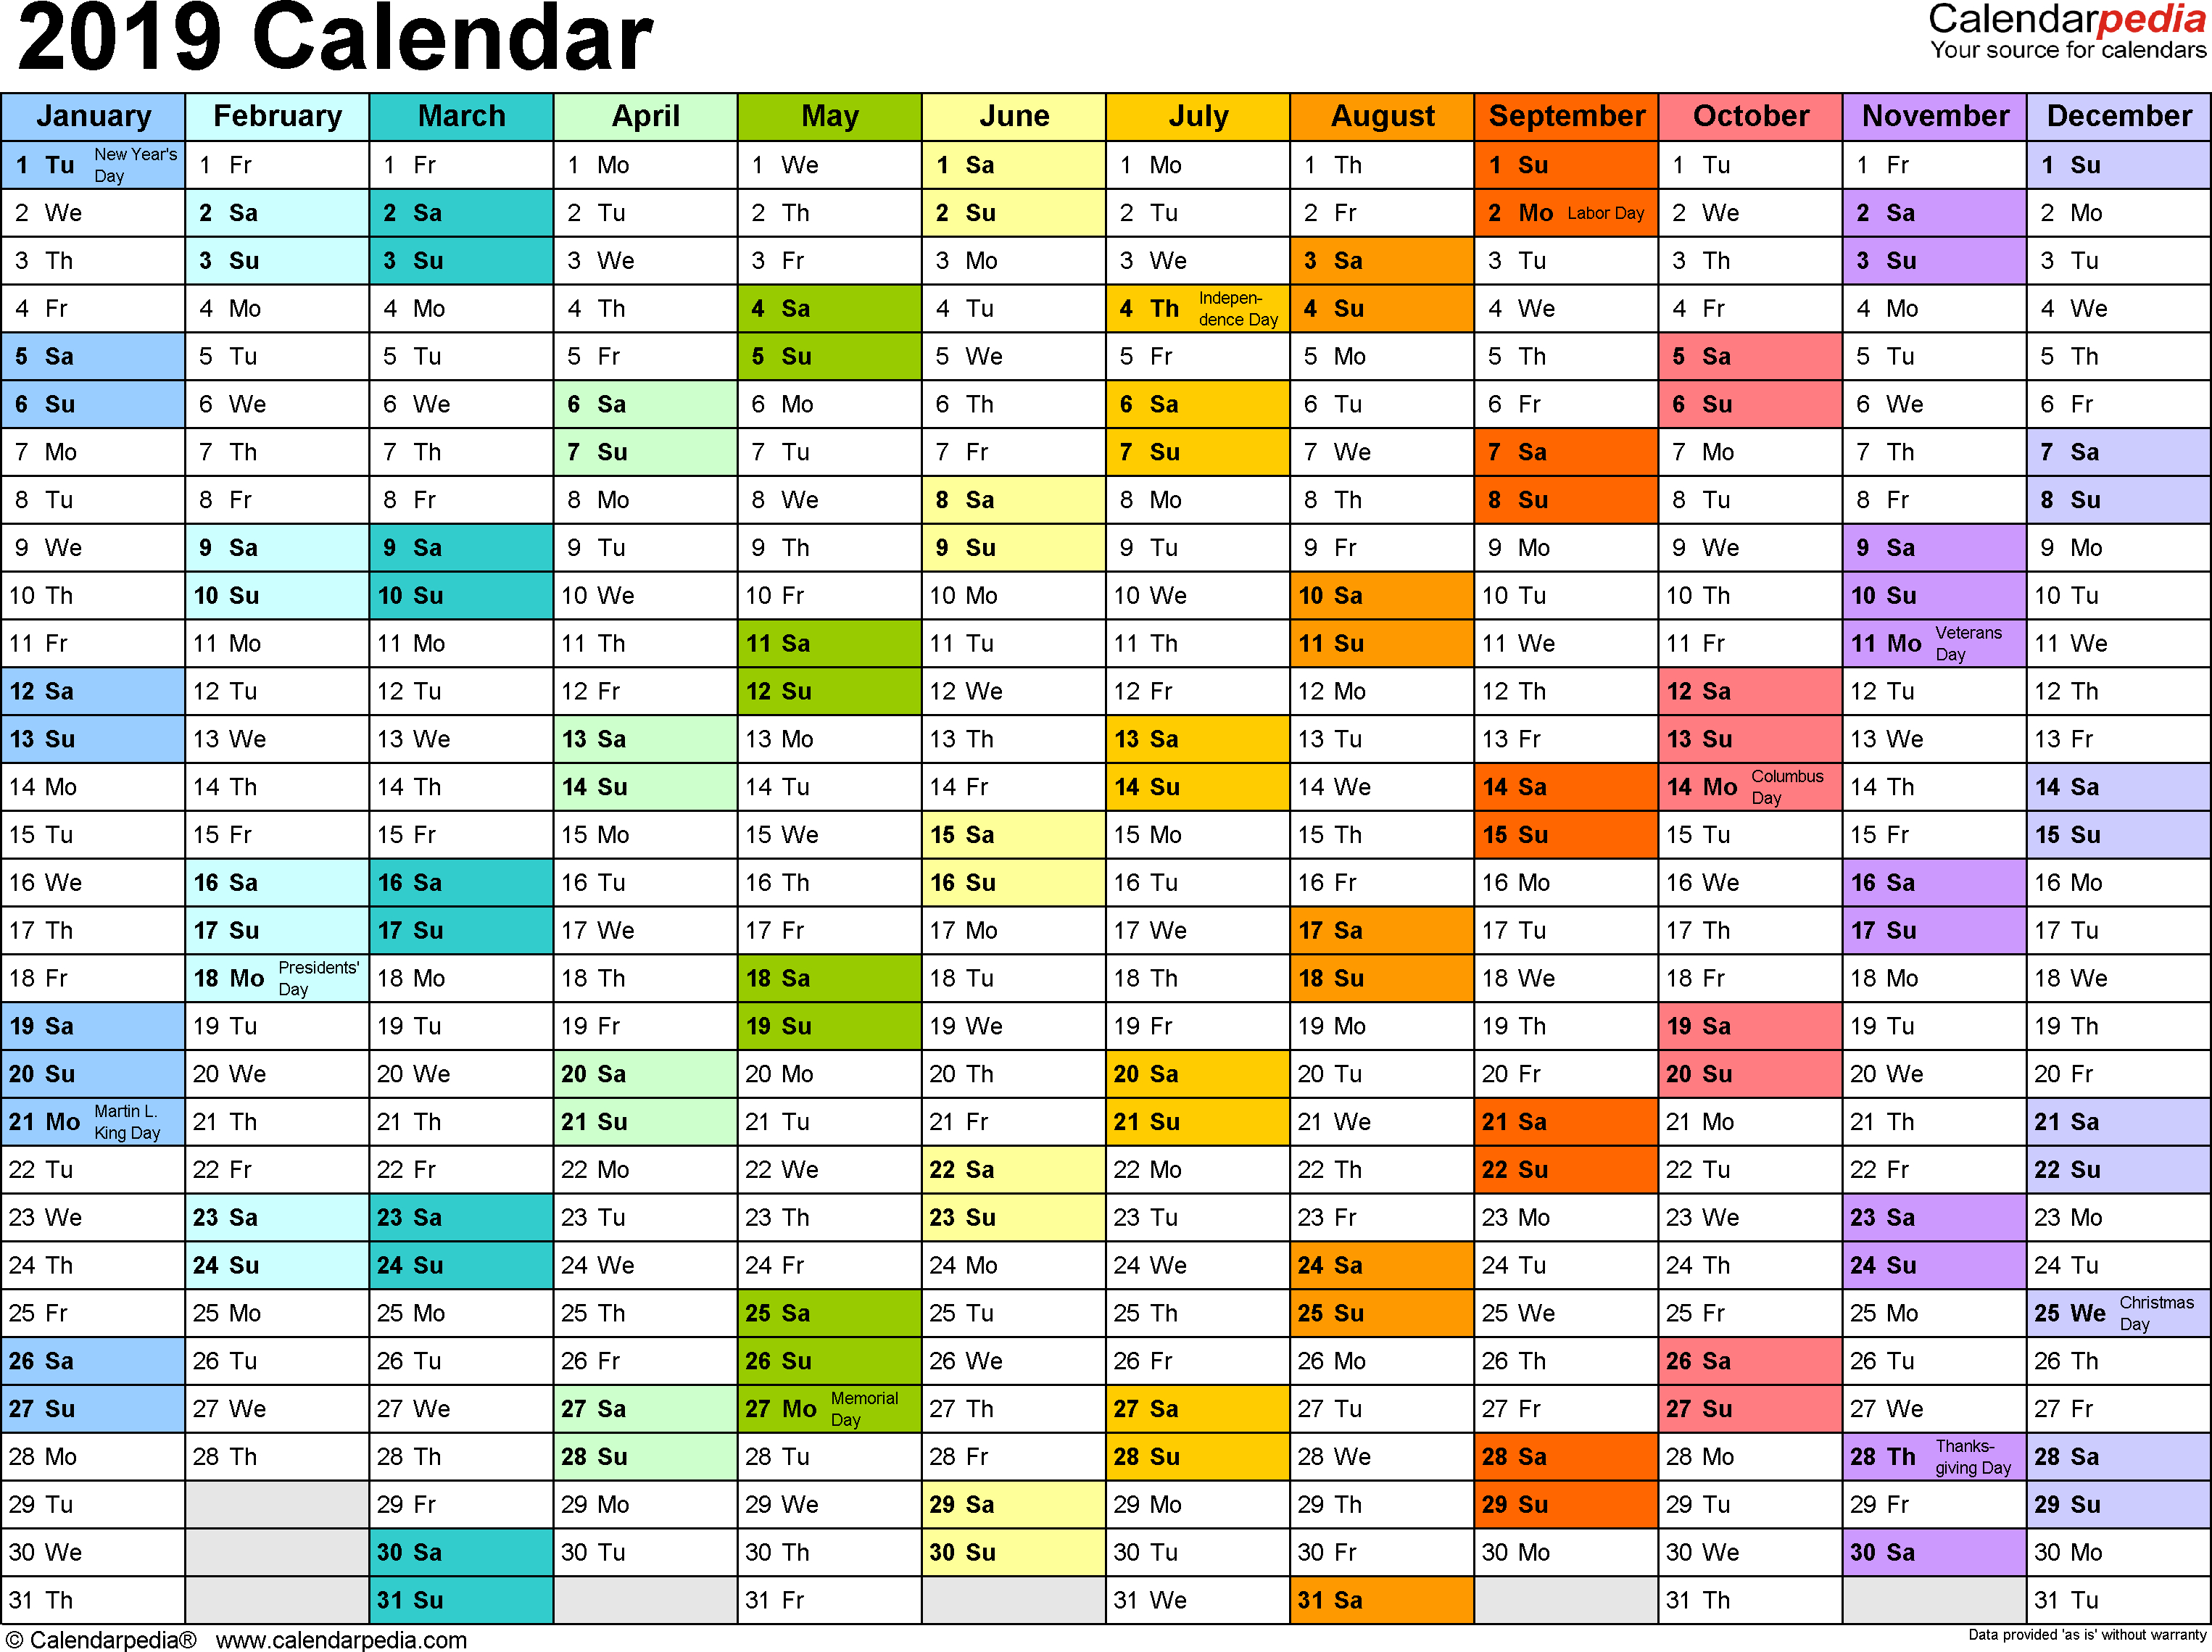 Calendar Spreadsheet Template Inside 2019 Calendar  Download 17 Free Printable Excel Templates .xlsx